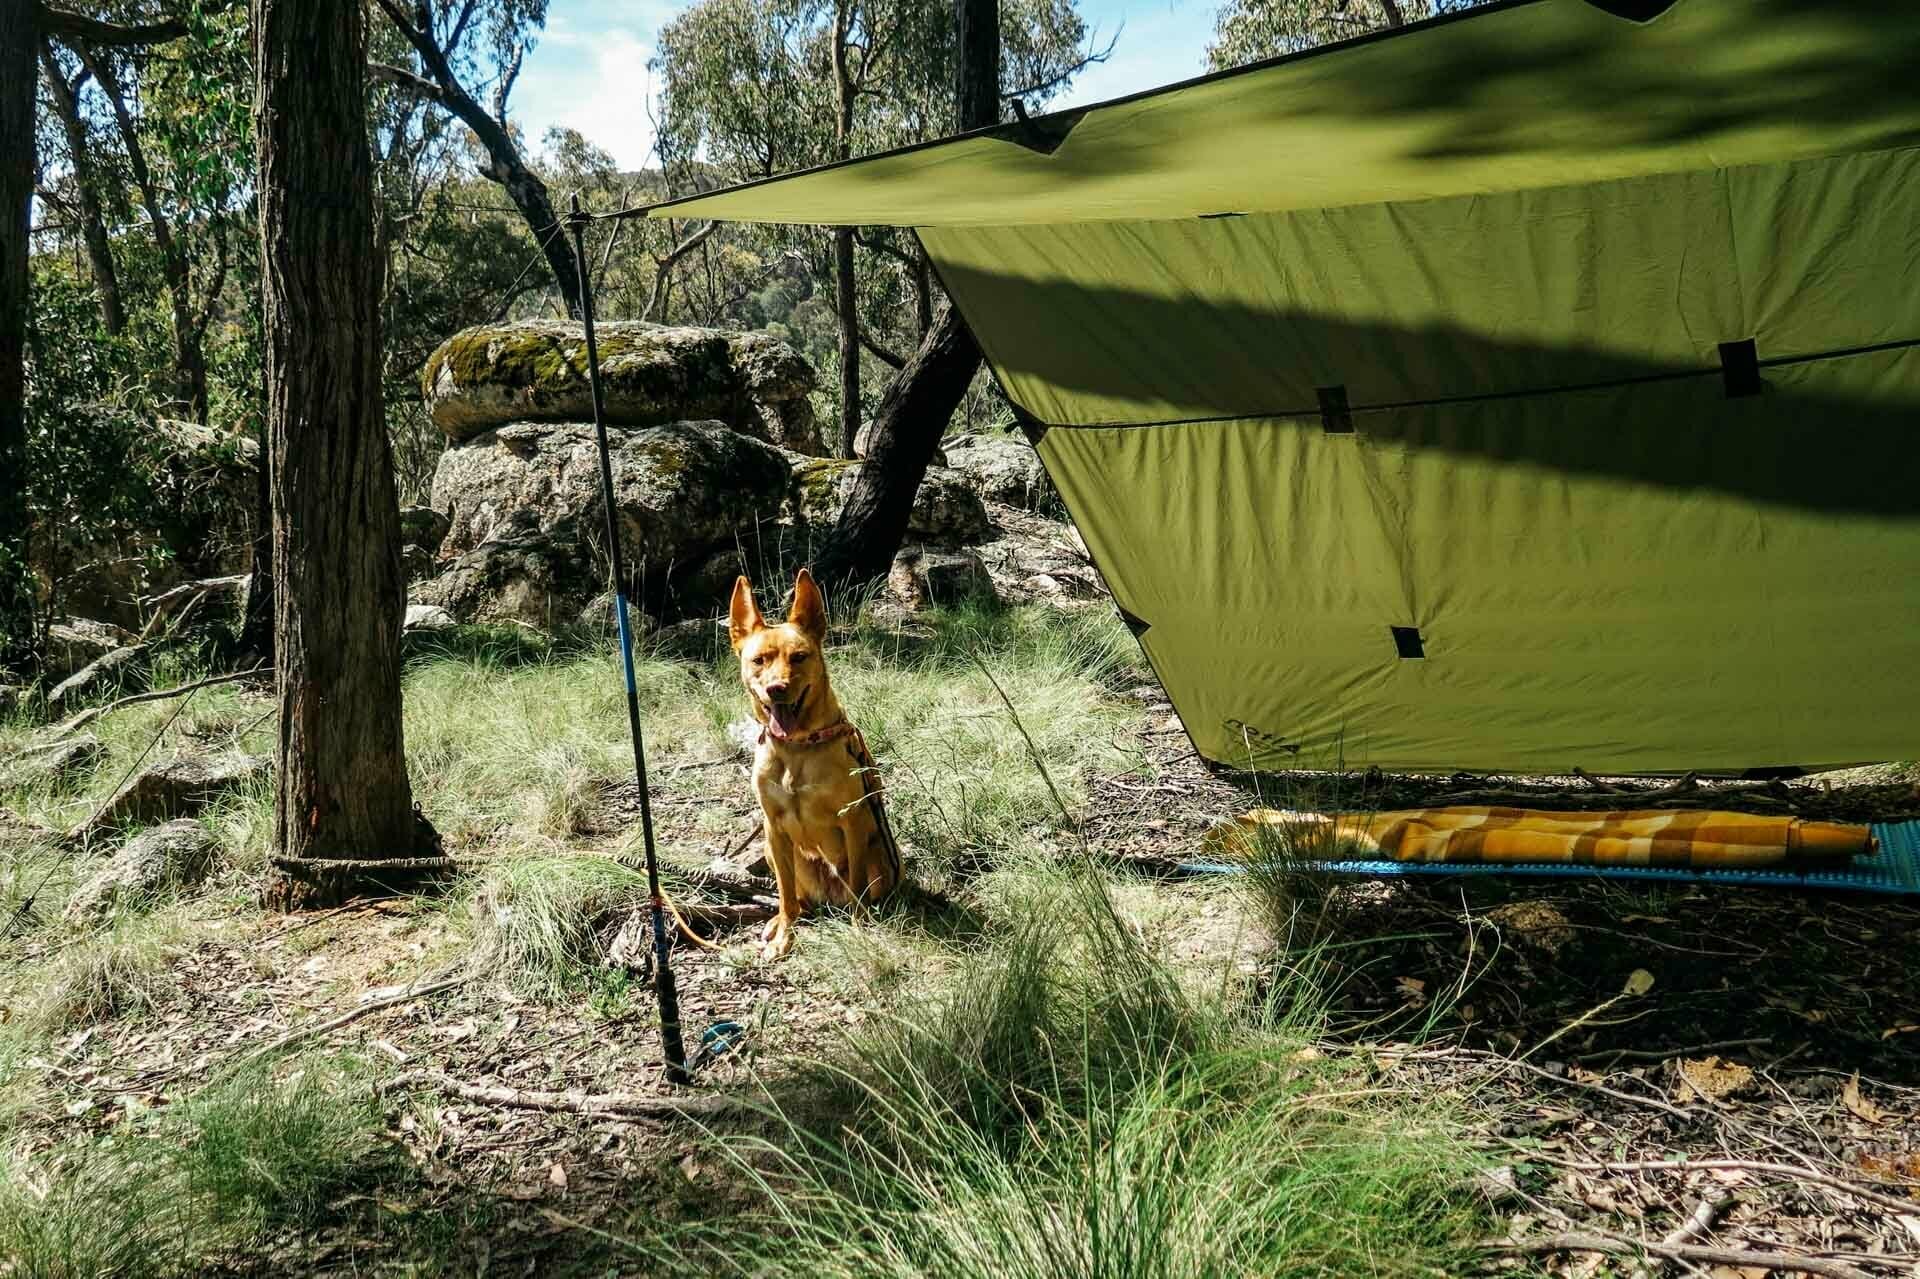 How To Camp Under a Tarp, kale munro, tarp camping, shelter, dog